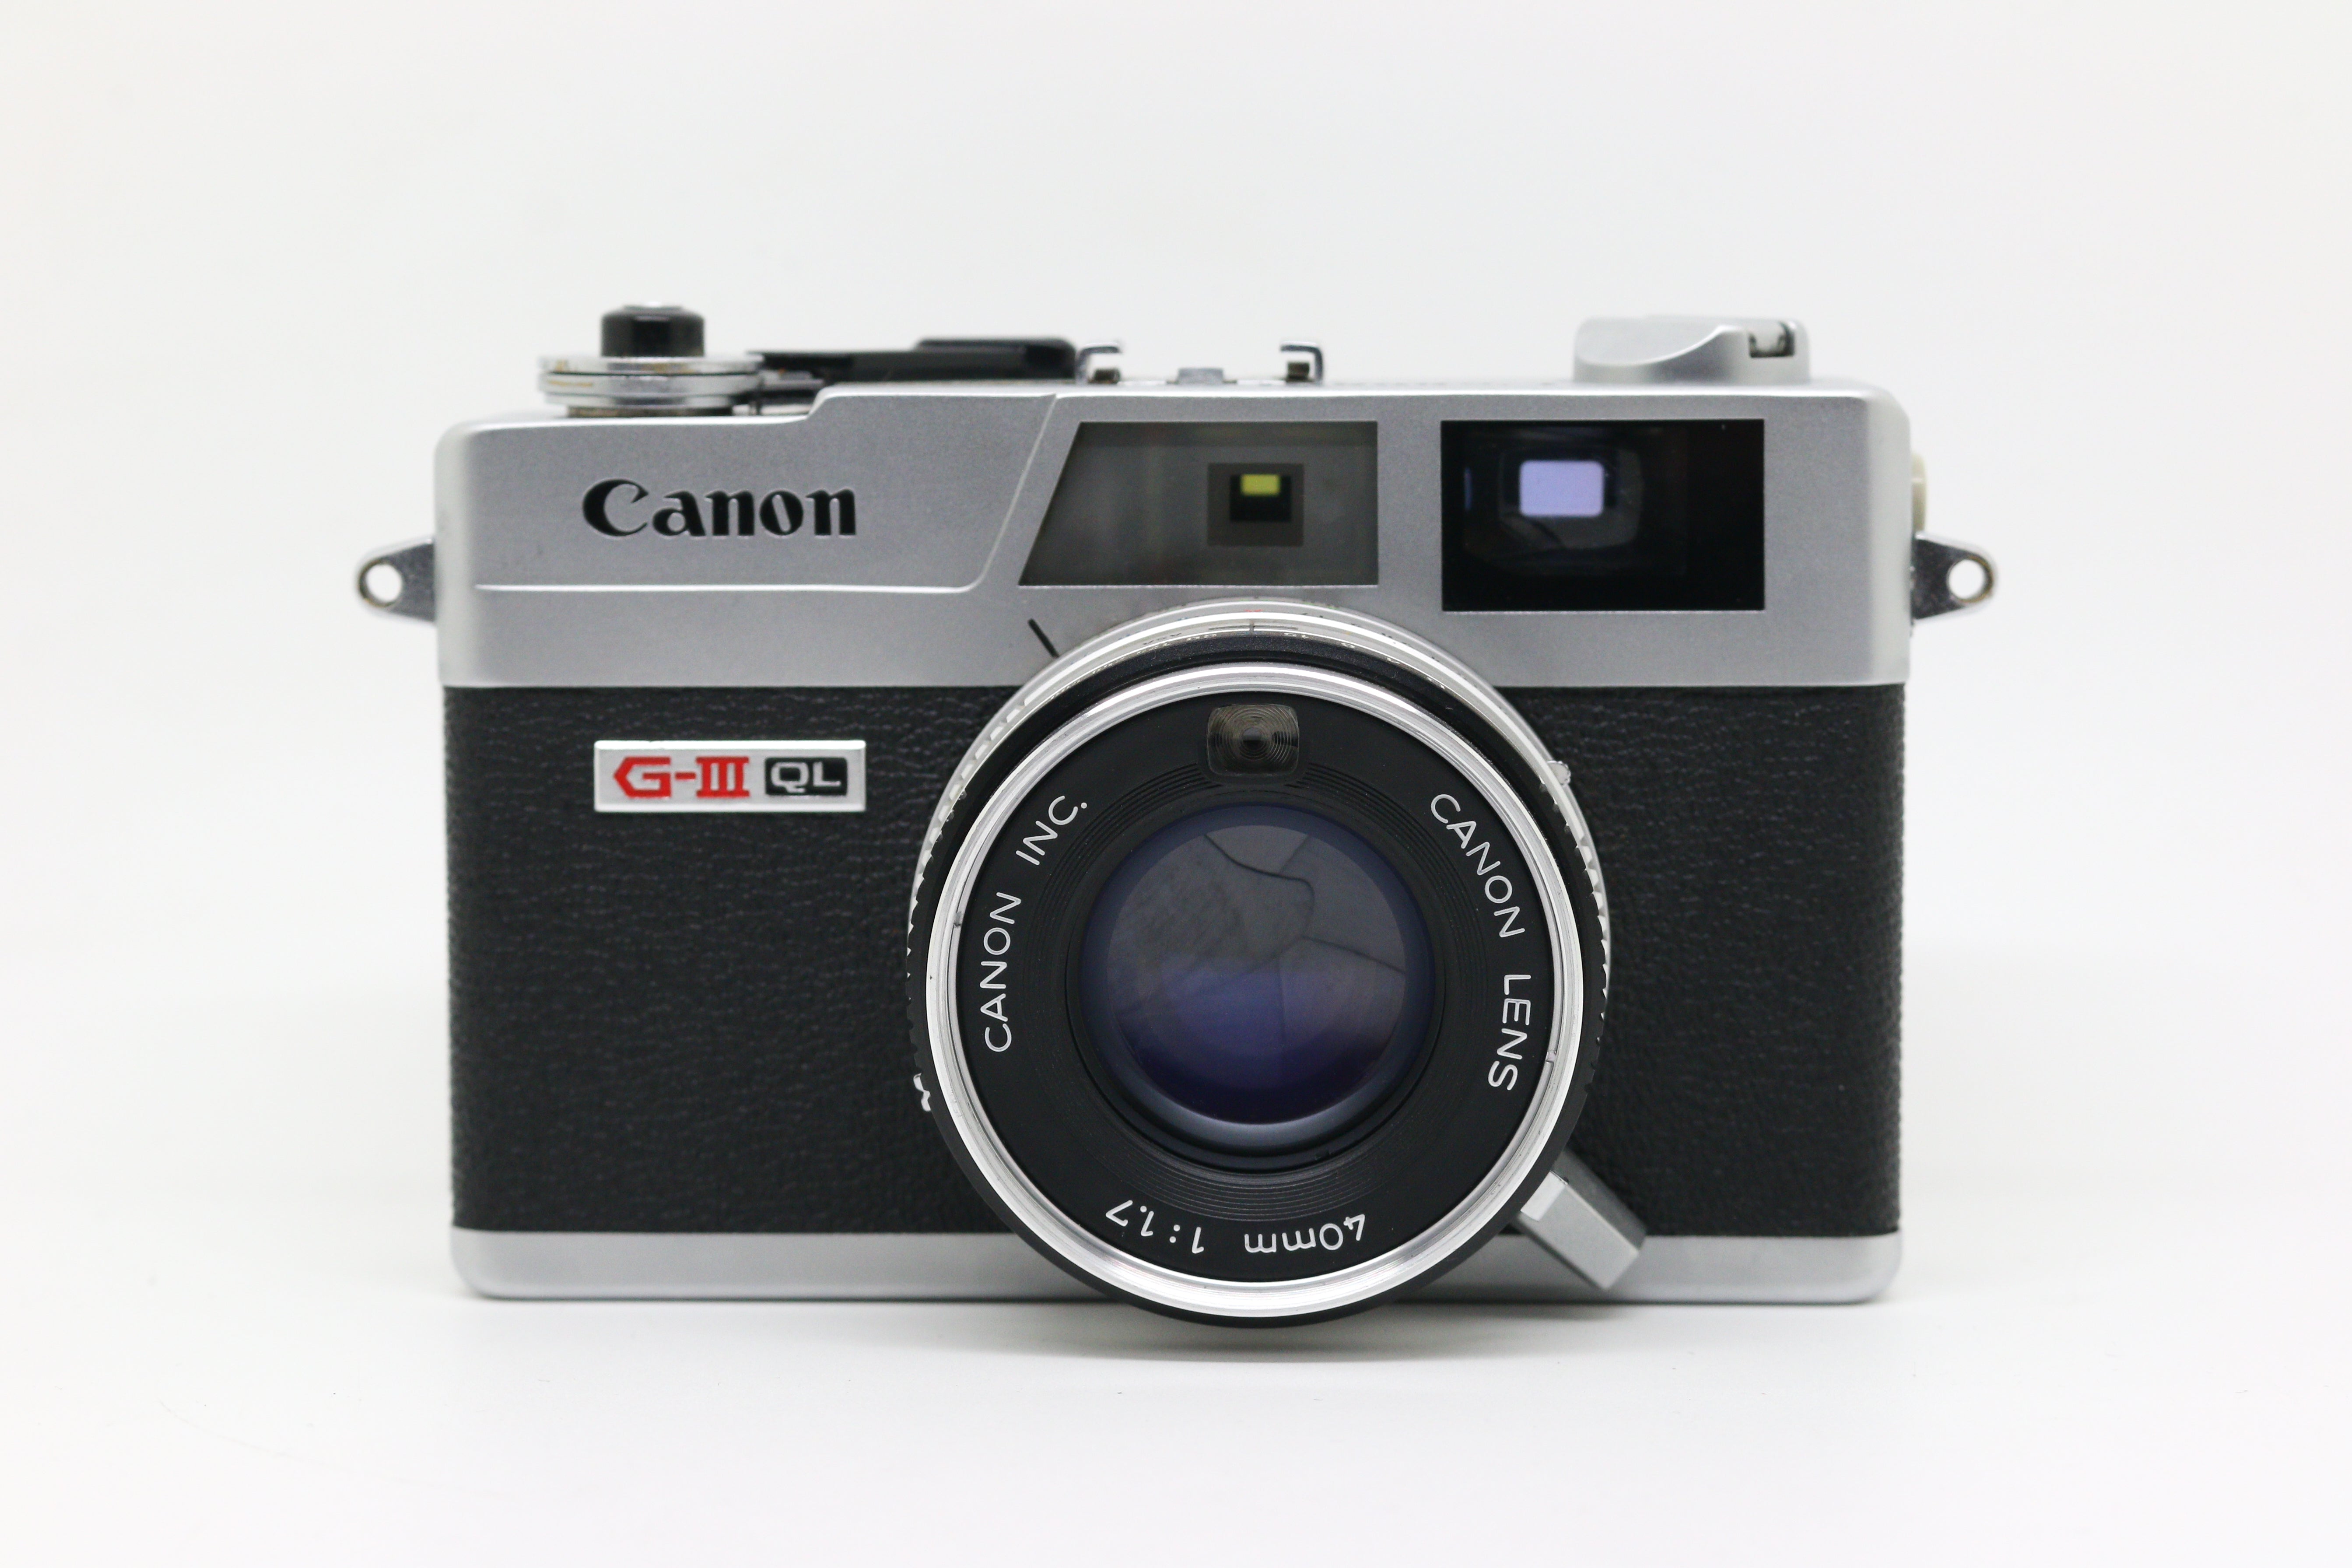 Canon Canonet QL17 G-III